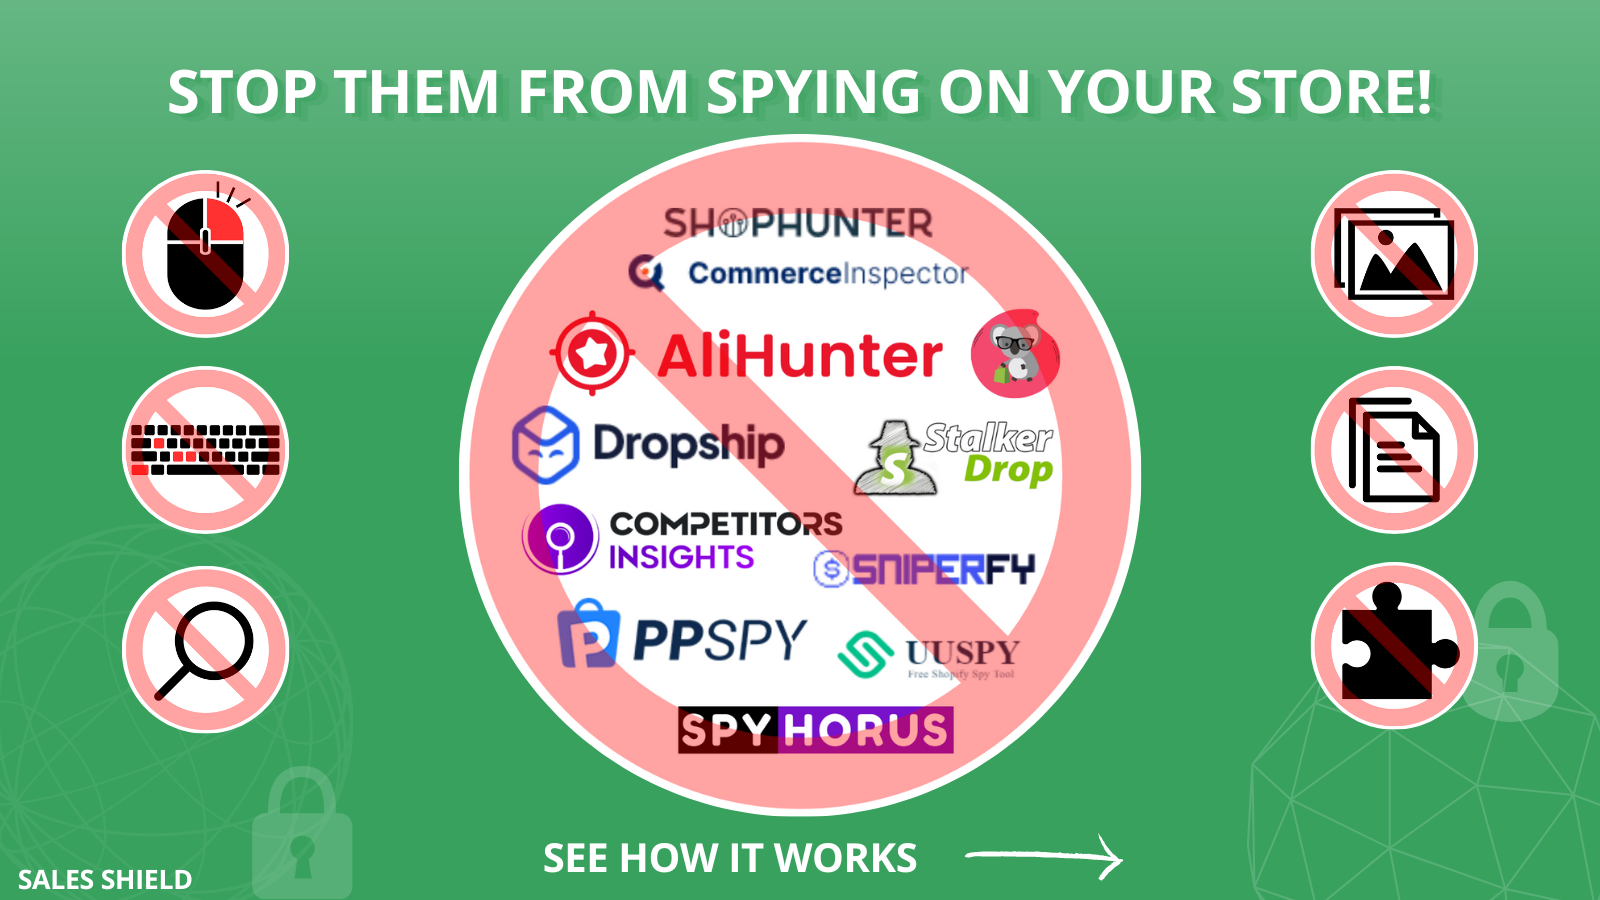 ¡Detén el espionaje en tu tienda! Shophunter, ppspy, uuspy